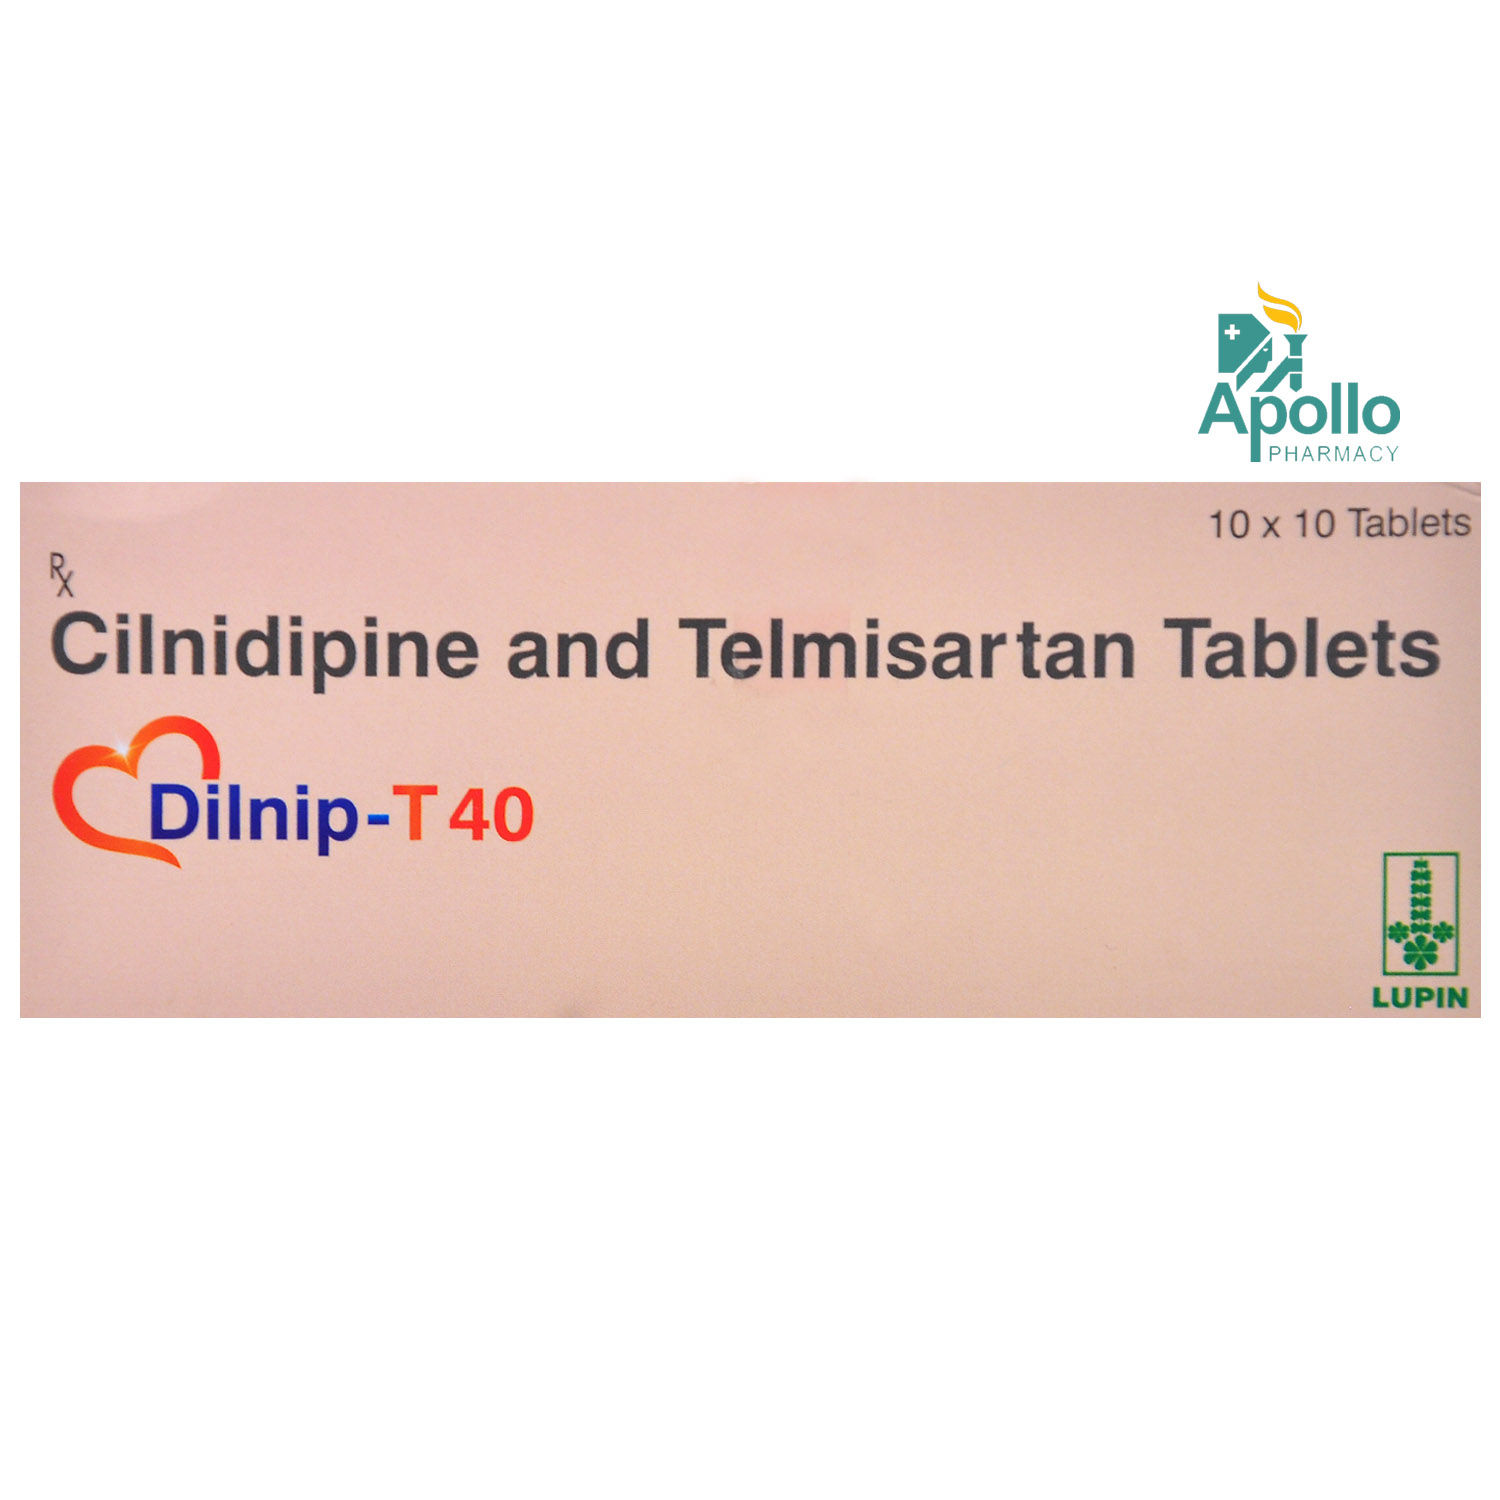 Dilnip-T 40 Tablet 10's, Pack of 10 TABLETS